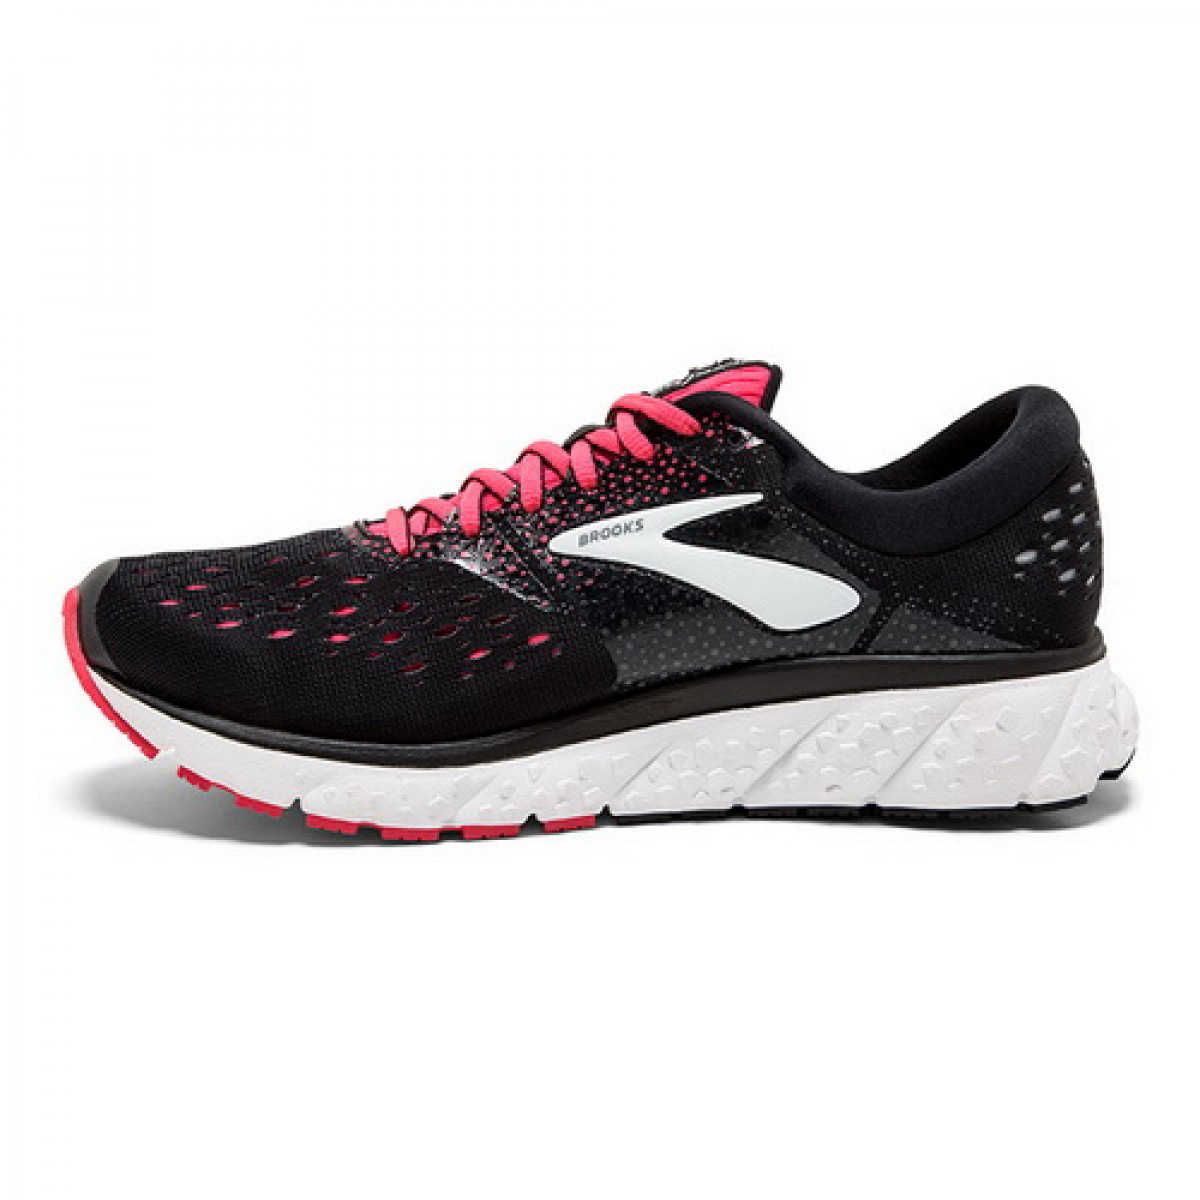 Chaussures Running Femme Glycerin 16 - Black/Pink/Grey